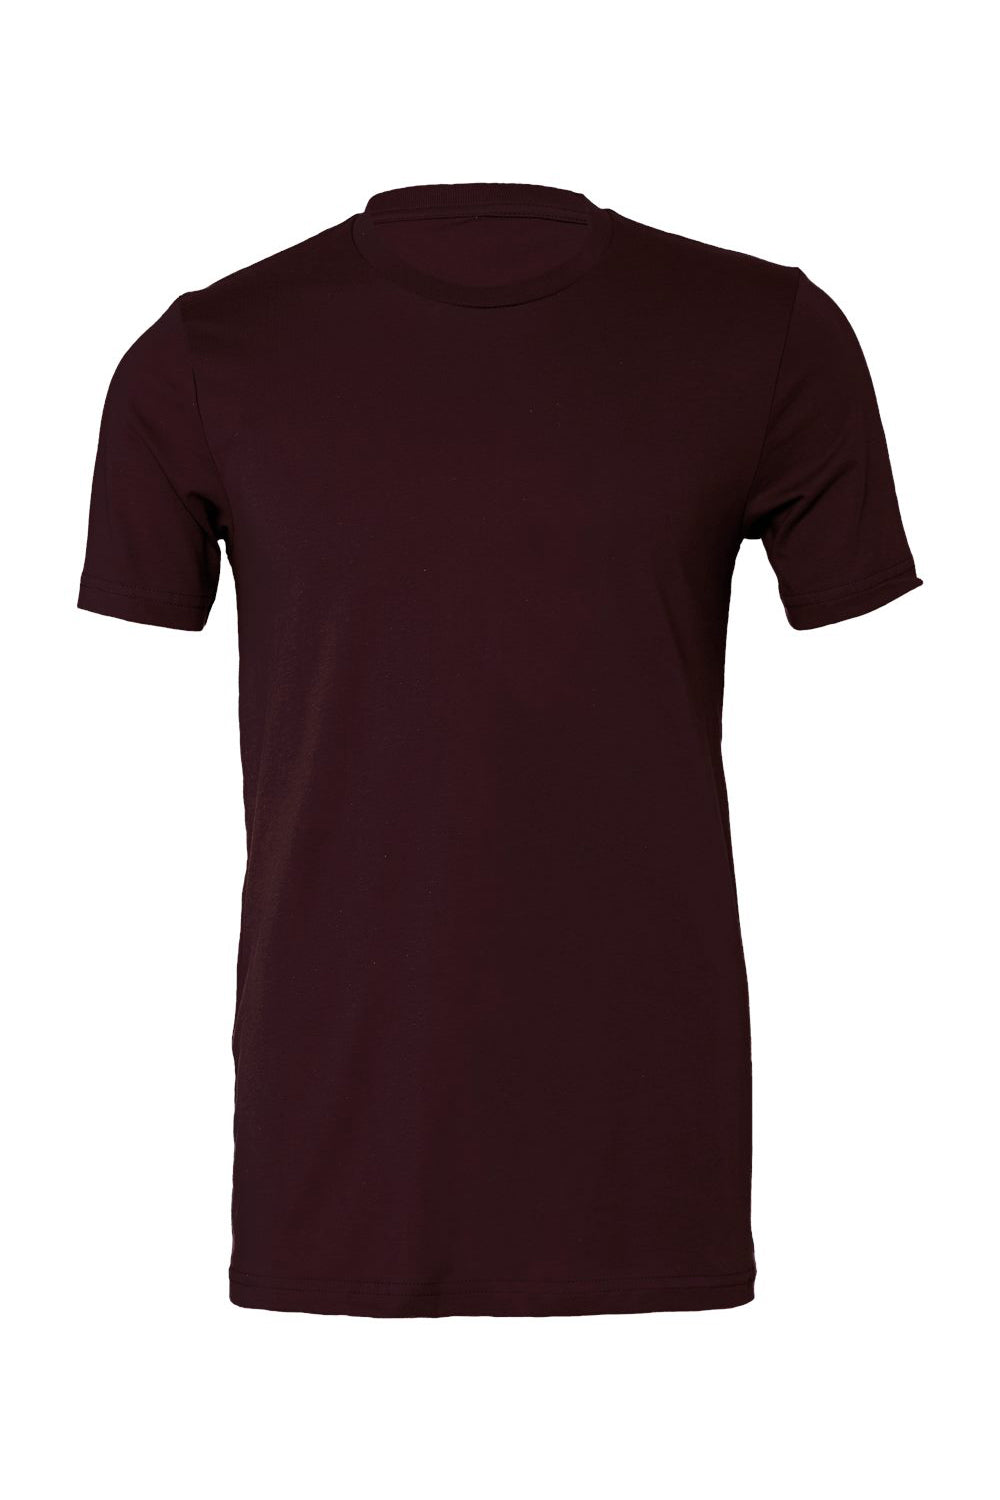 Bella + Canvas BC3001/3001C Mens Jersey Short Sleeve Crewneck T-Shirt Oxblood Black Flat Front